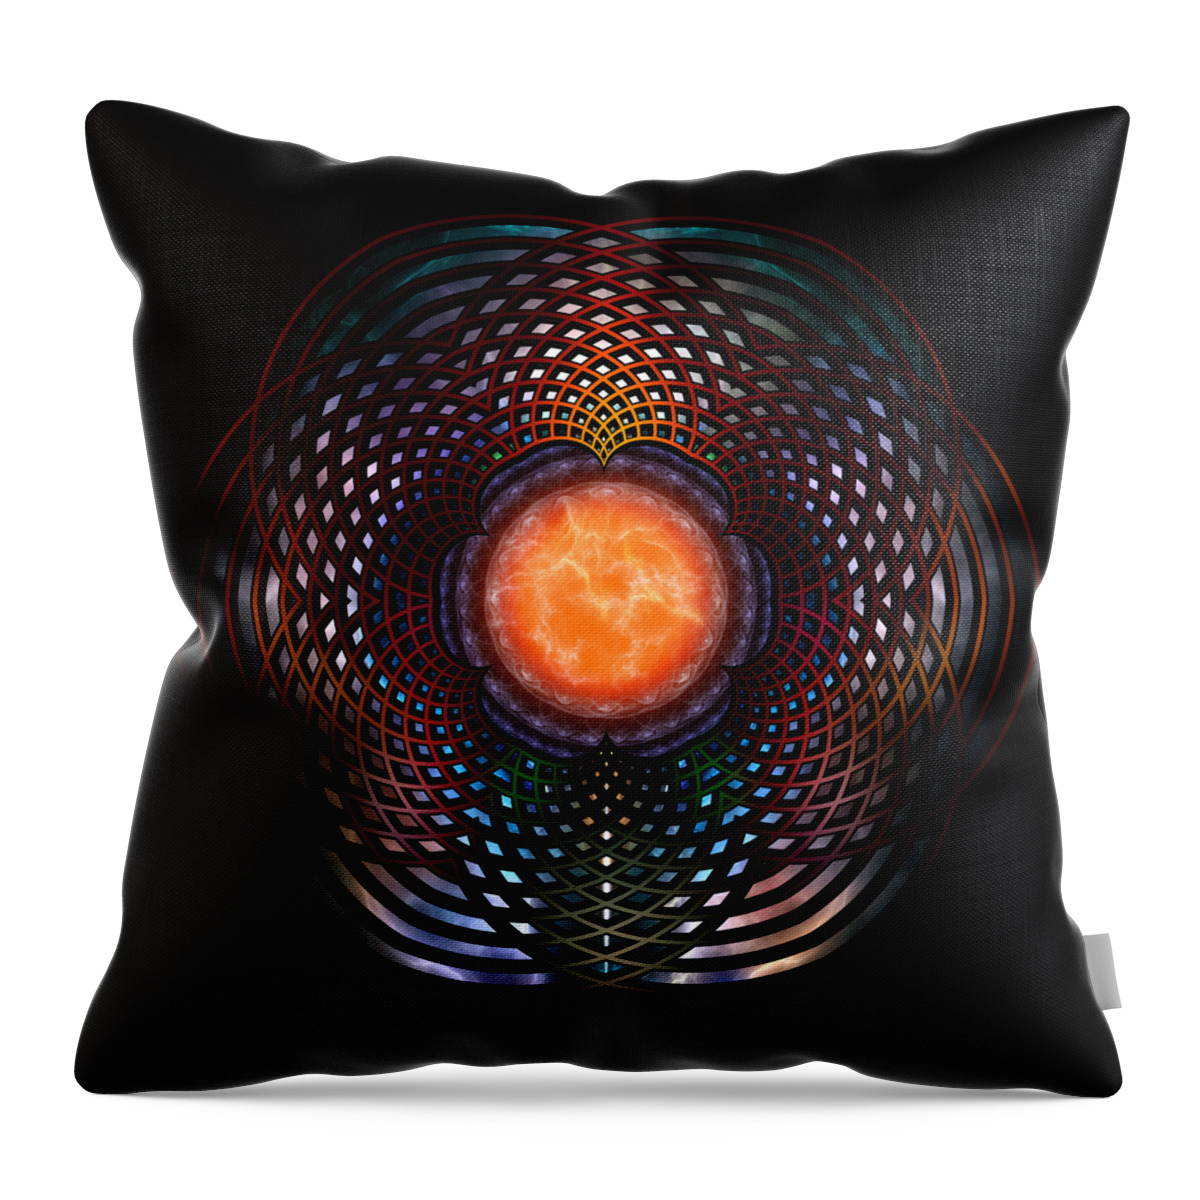 Orb Throw Pillow featuring the digital art Orb Moon Rings by Rolando Burbon